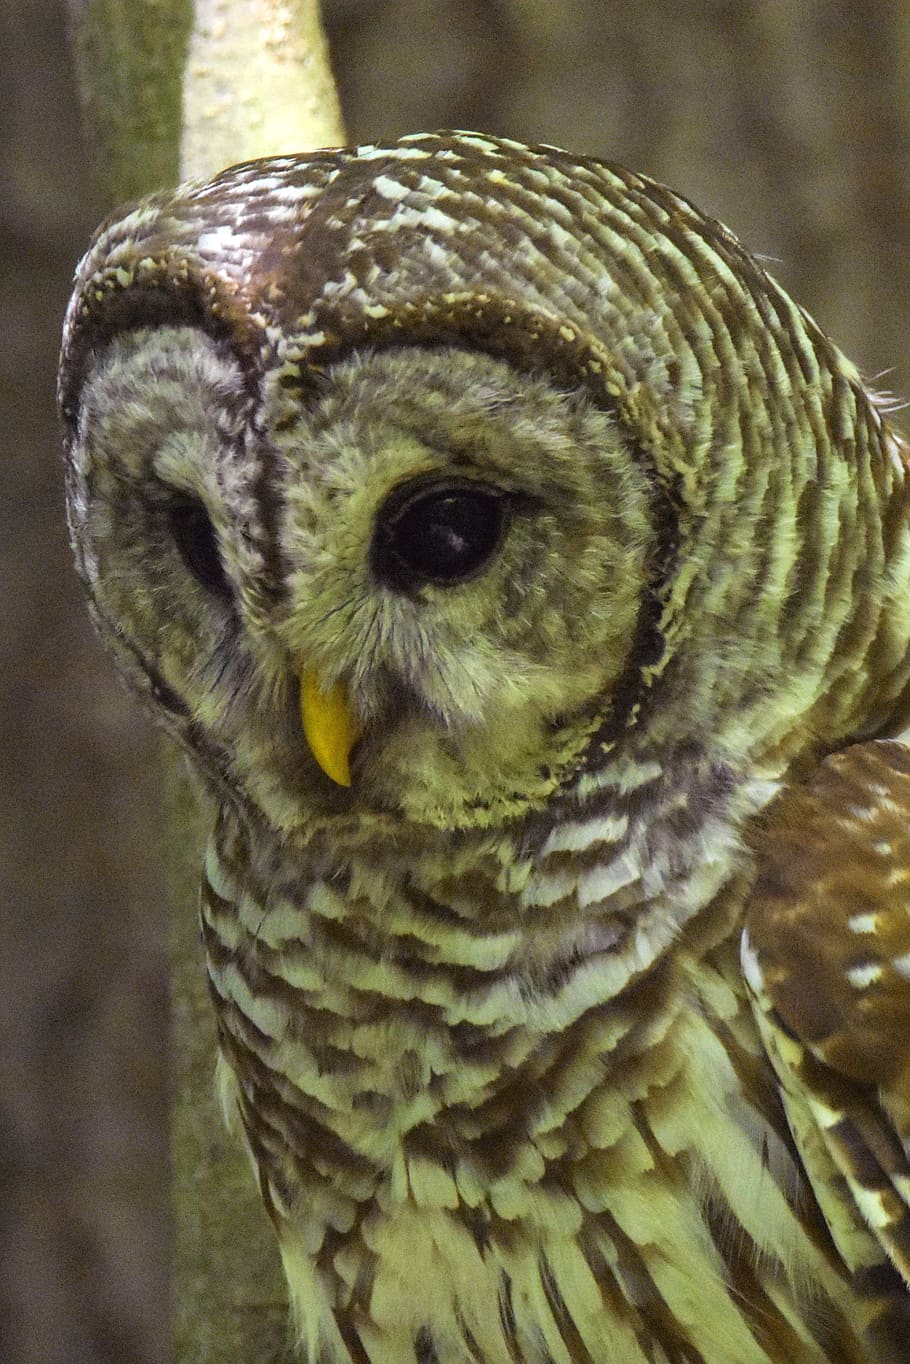 barred owl, closeup semi-profile, large bird, brown and white bird, natural environment, watching its prey, animal themes, one animal, animal wildlife, animal